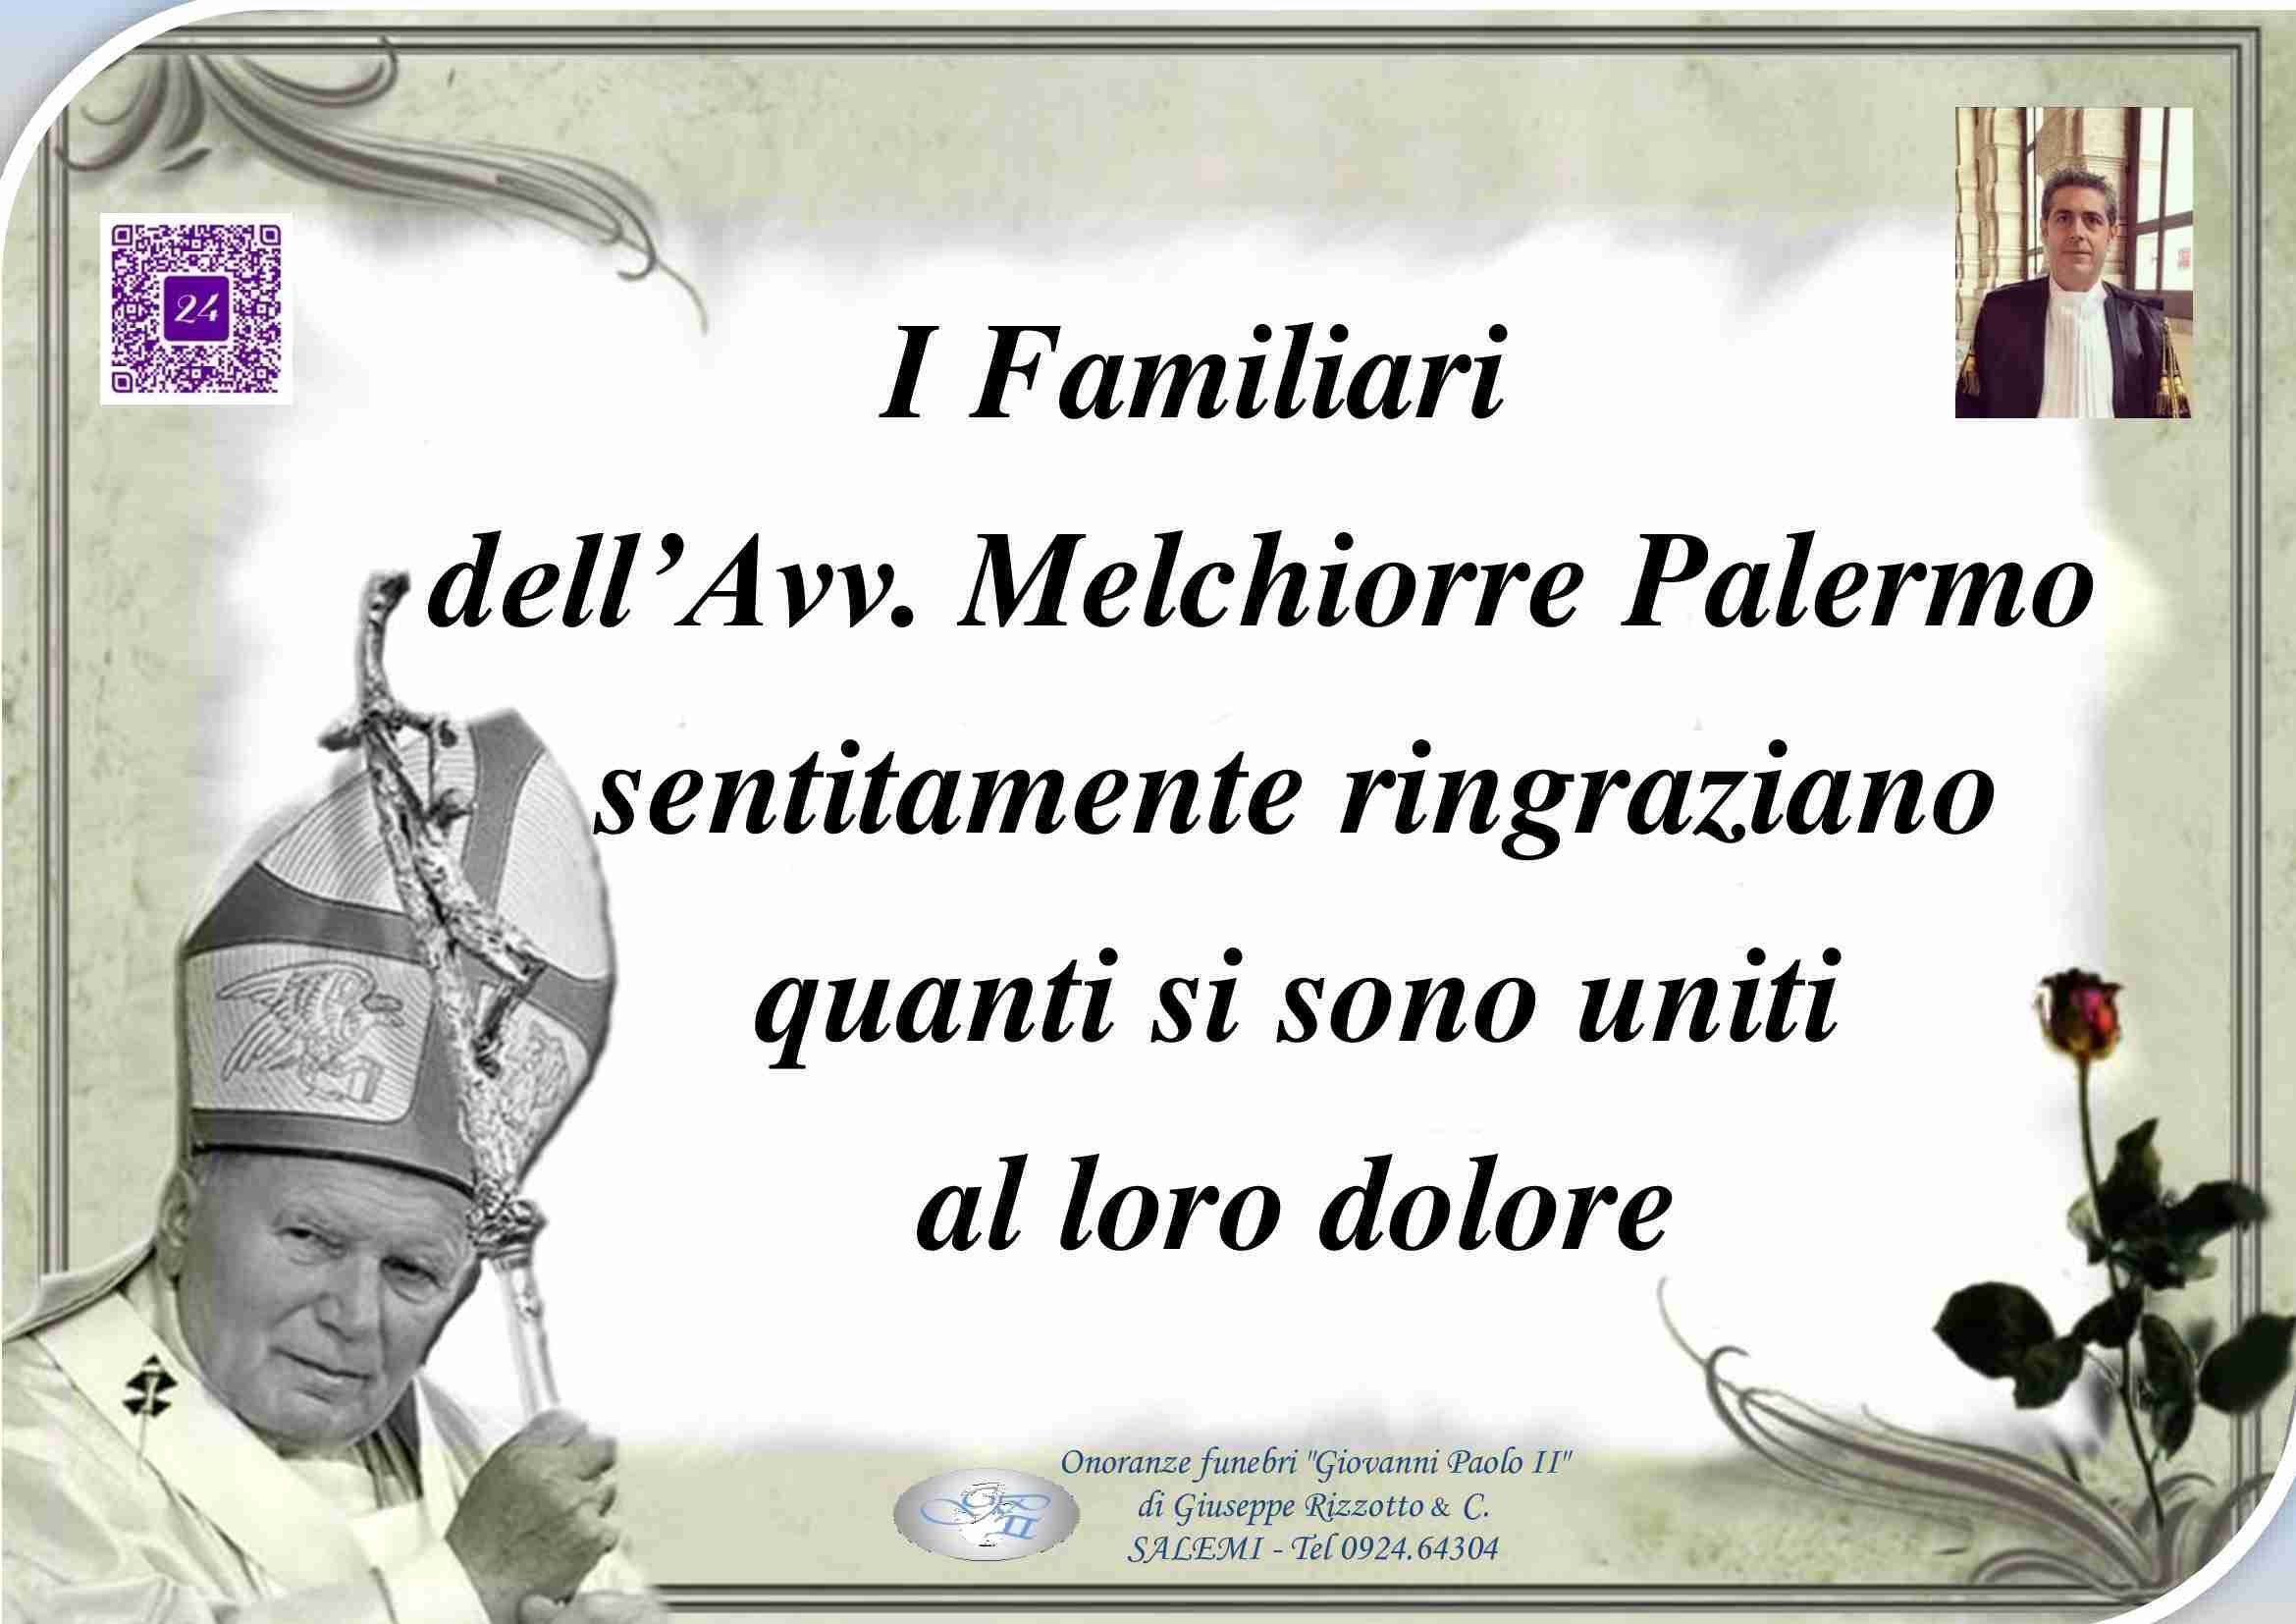 Melchiorre Palermo